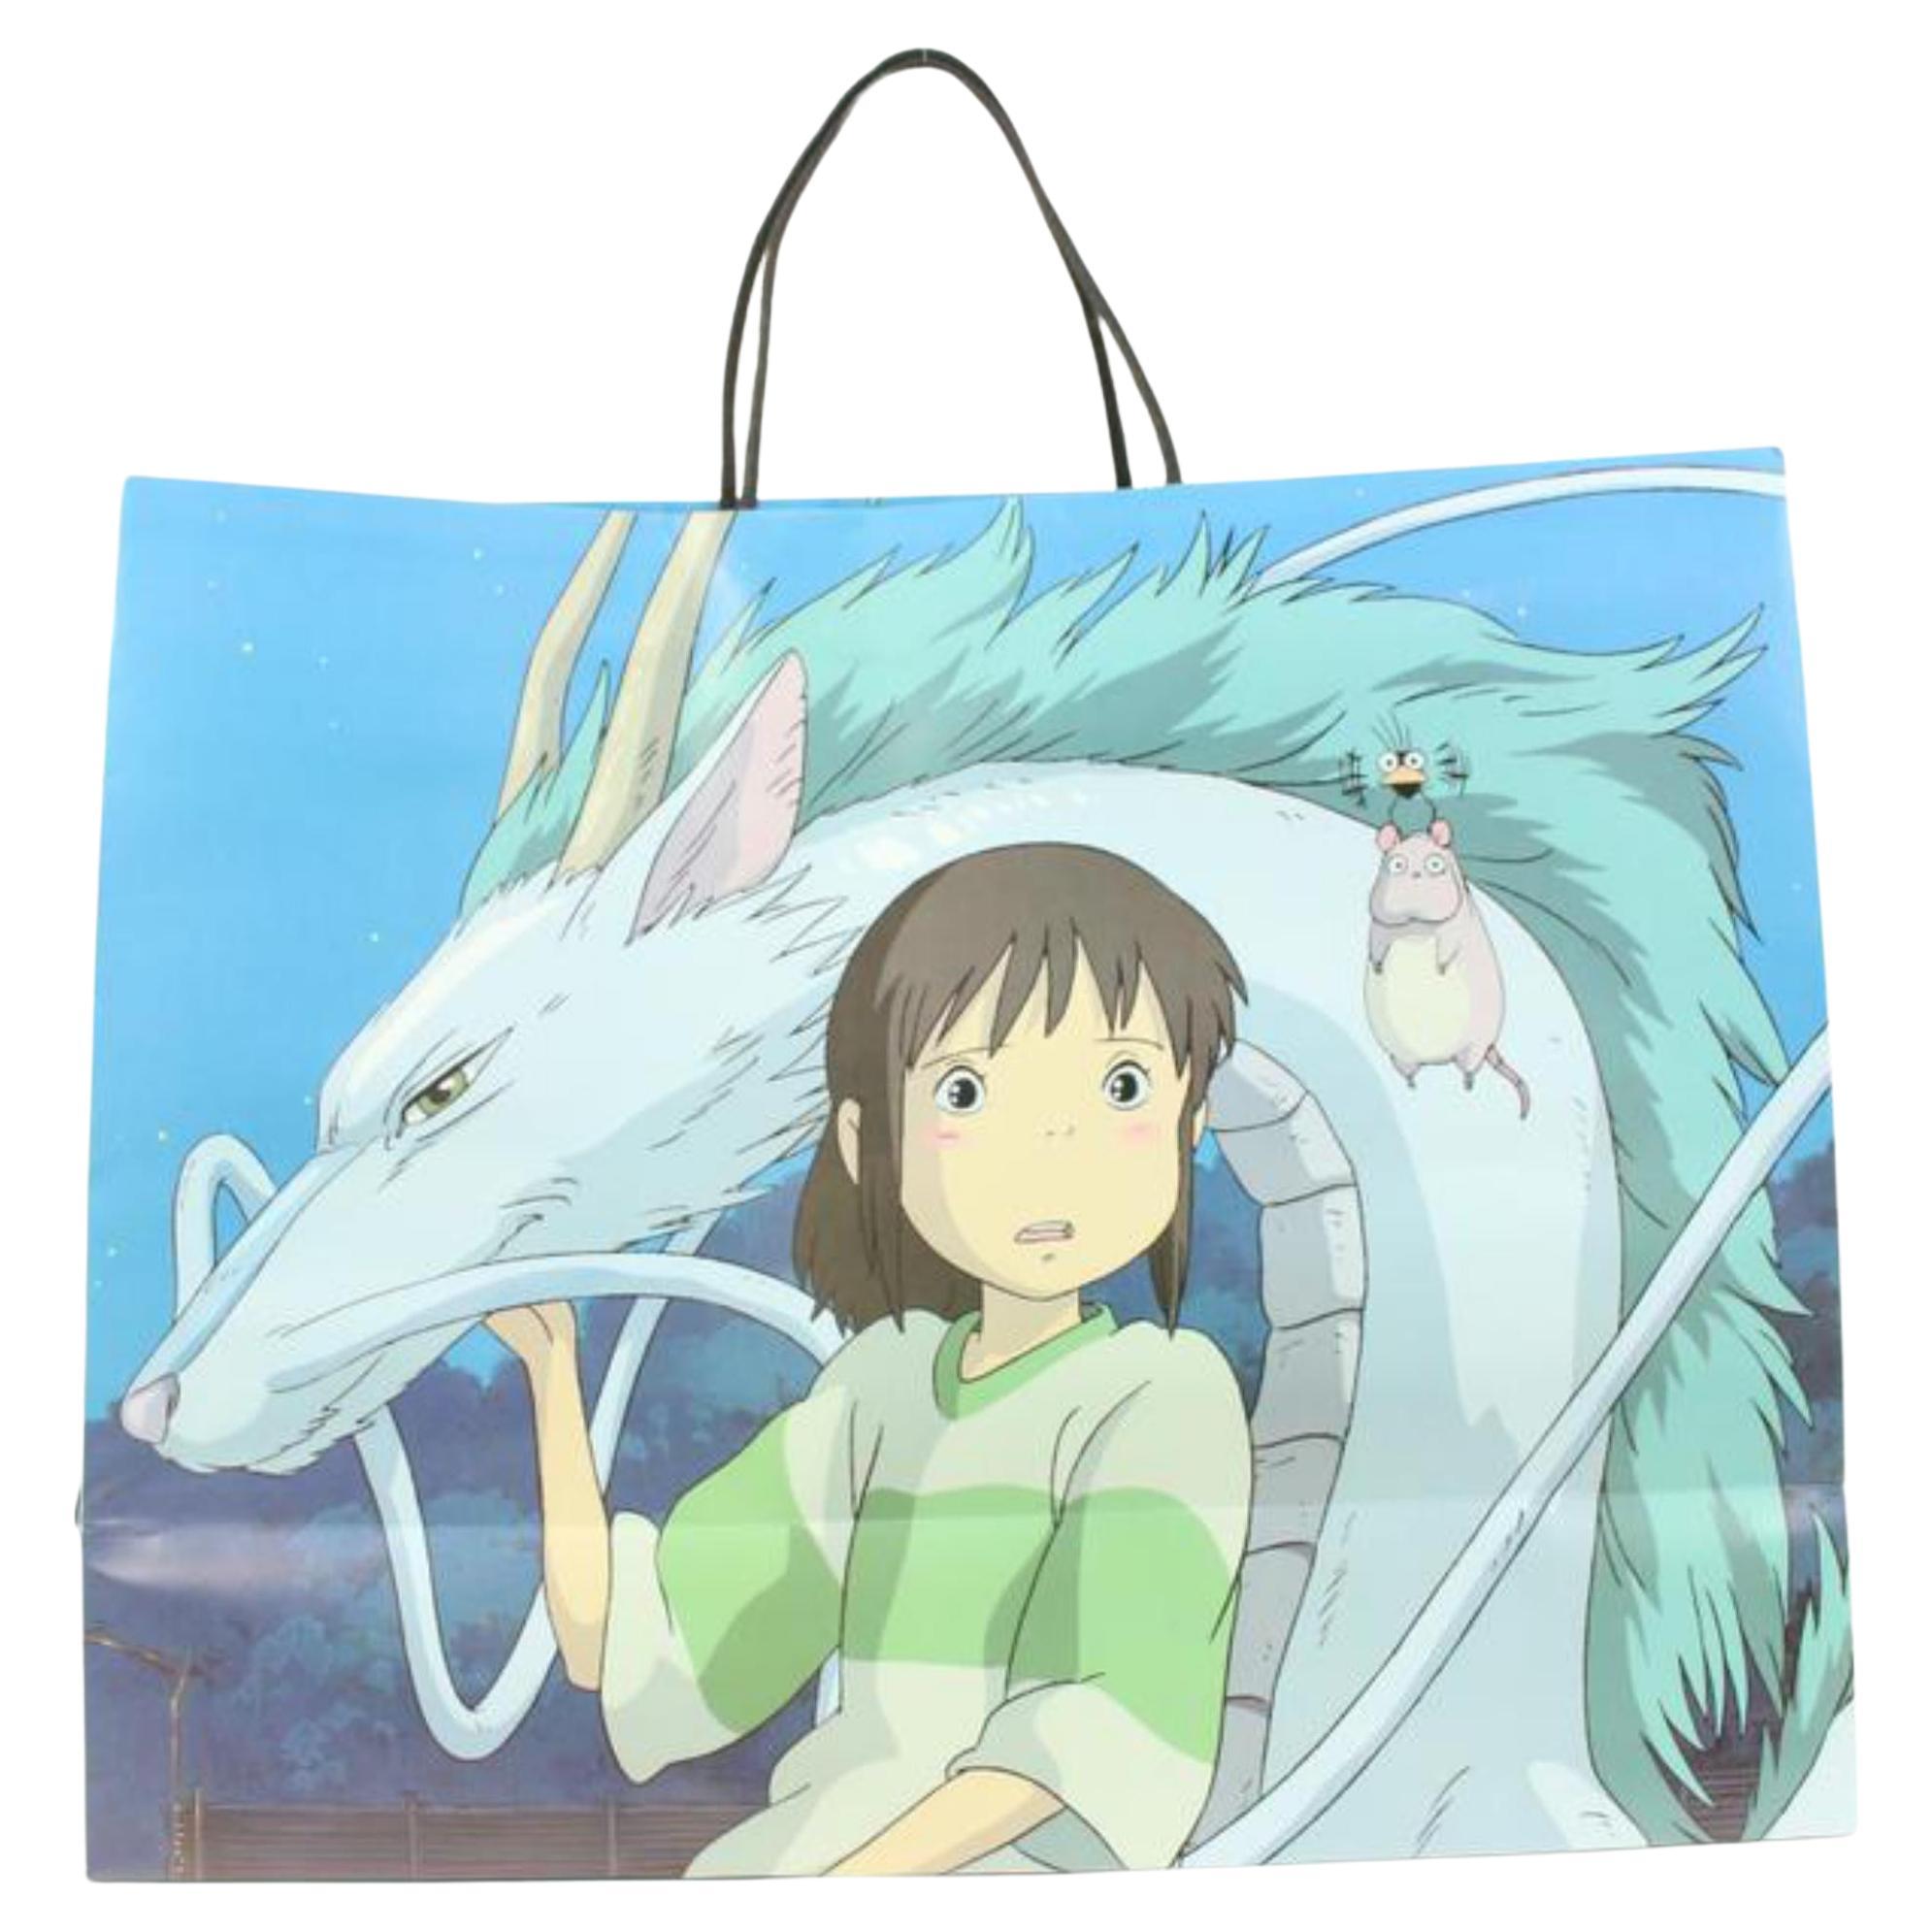 Loewe Studio Ghibli Spirited Away Shopping Tote Bag 48lo37s